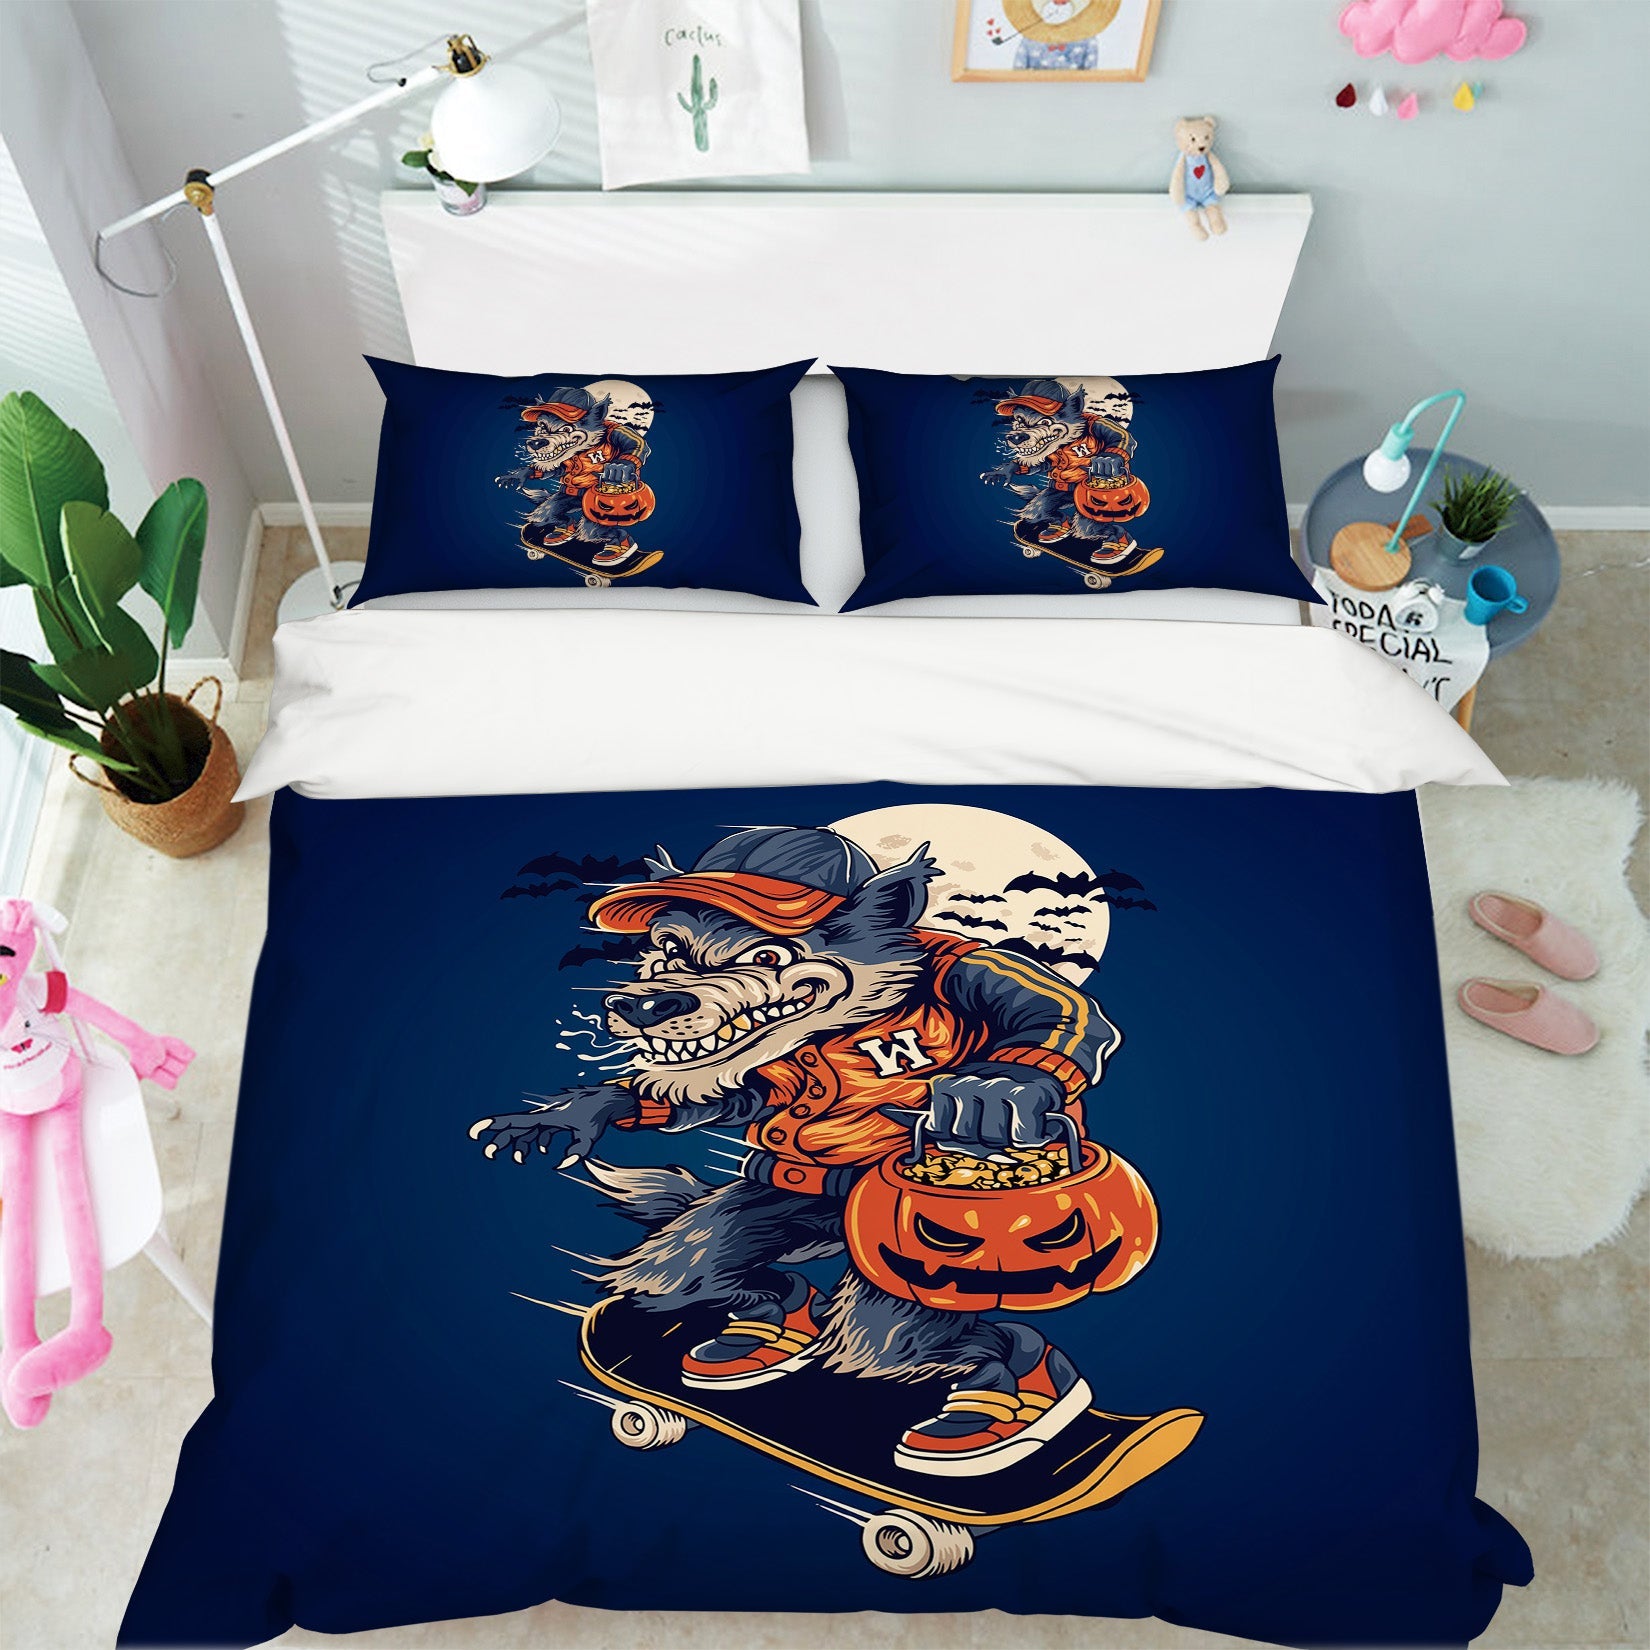 3D Dog Skateboard Pumpkin 1209 Halloween Bed Pillowcases Quilt Quiet Covers AJ Creativity Home 